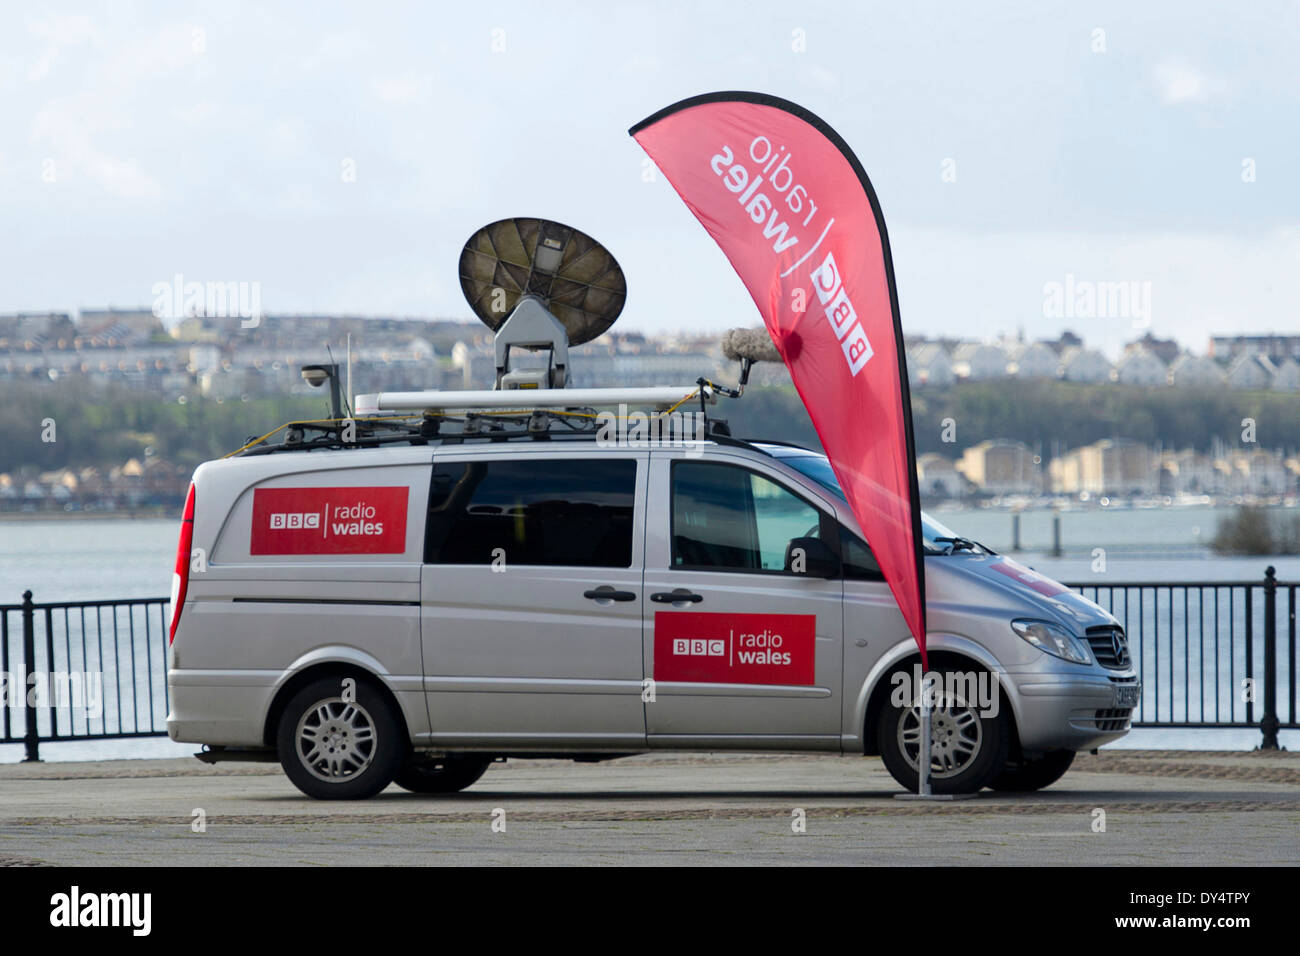 BBC Wales satellite van. Stock Photo